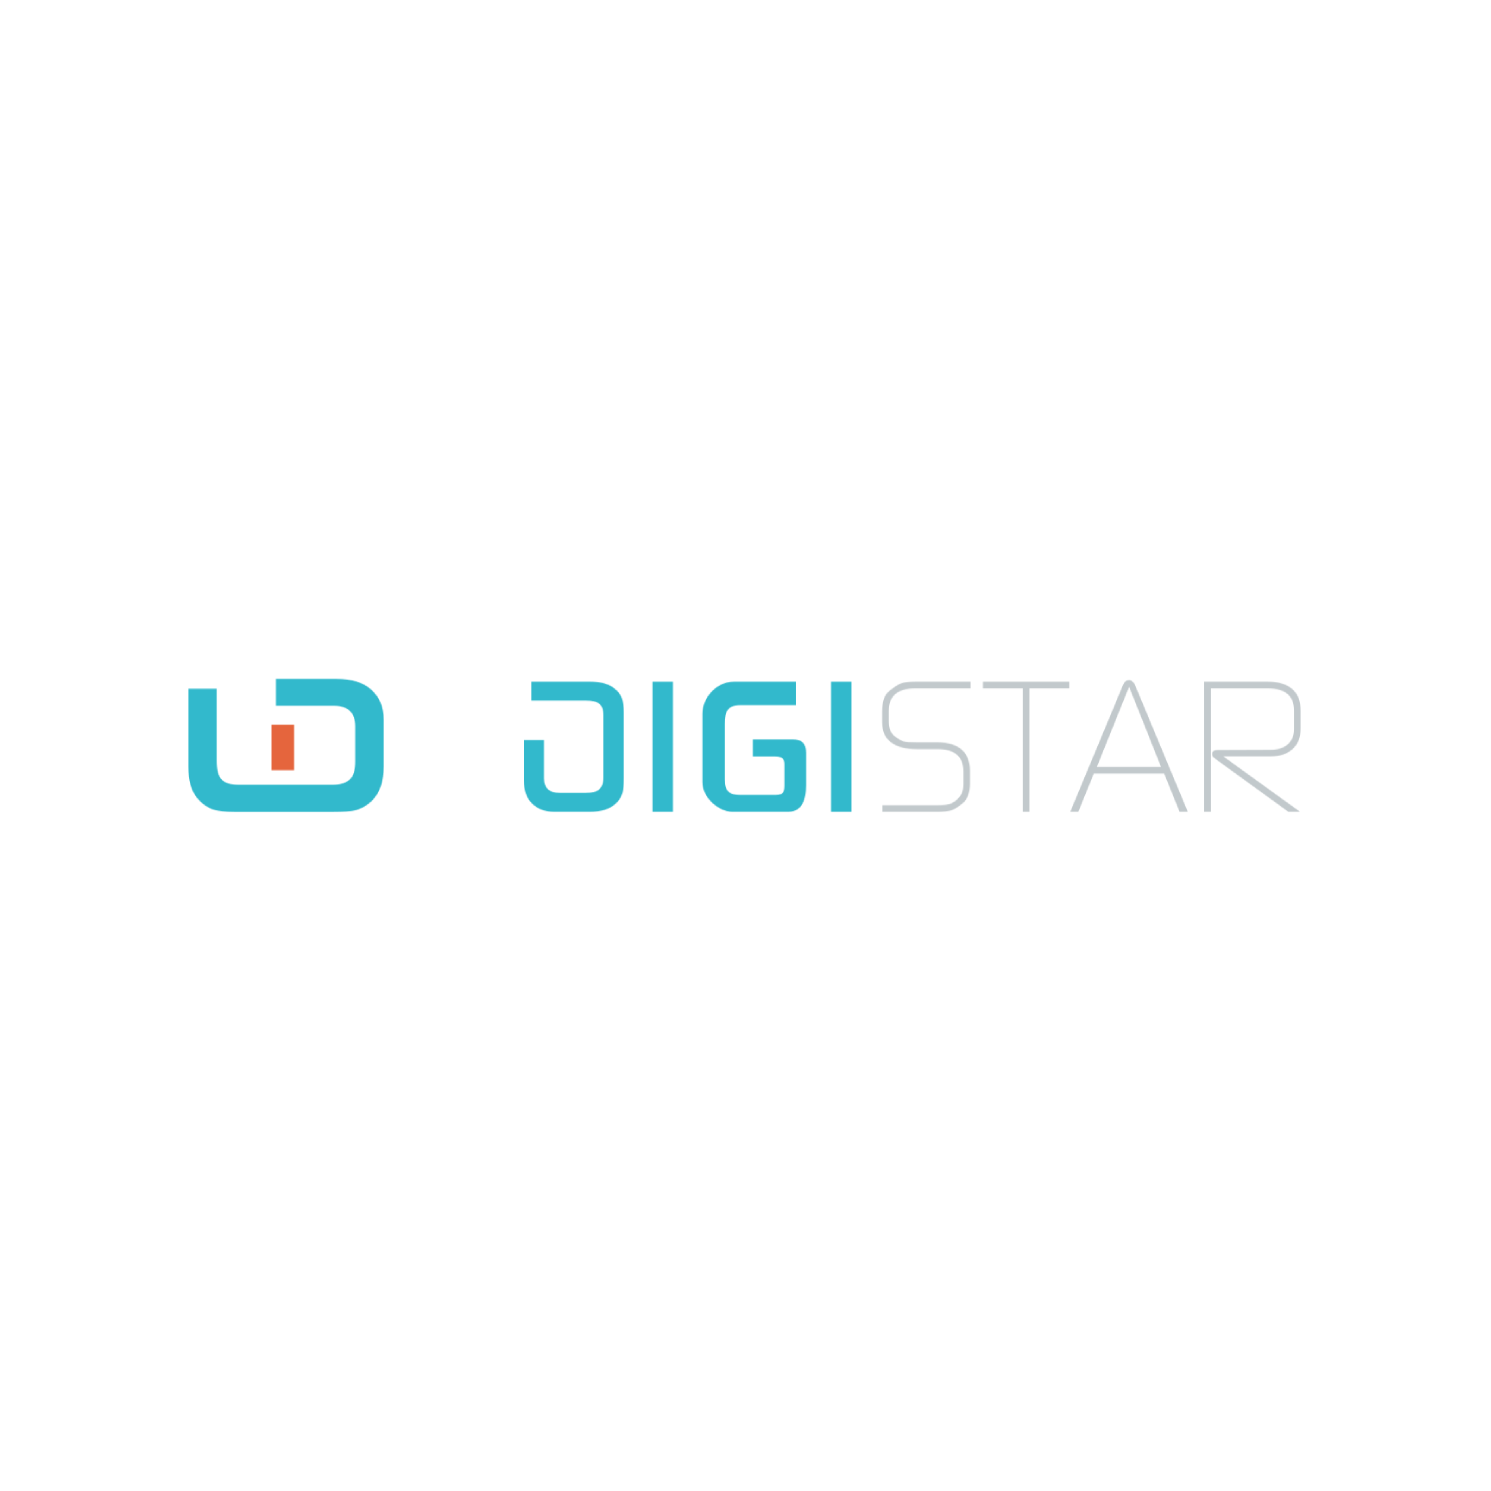 digistar_logo